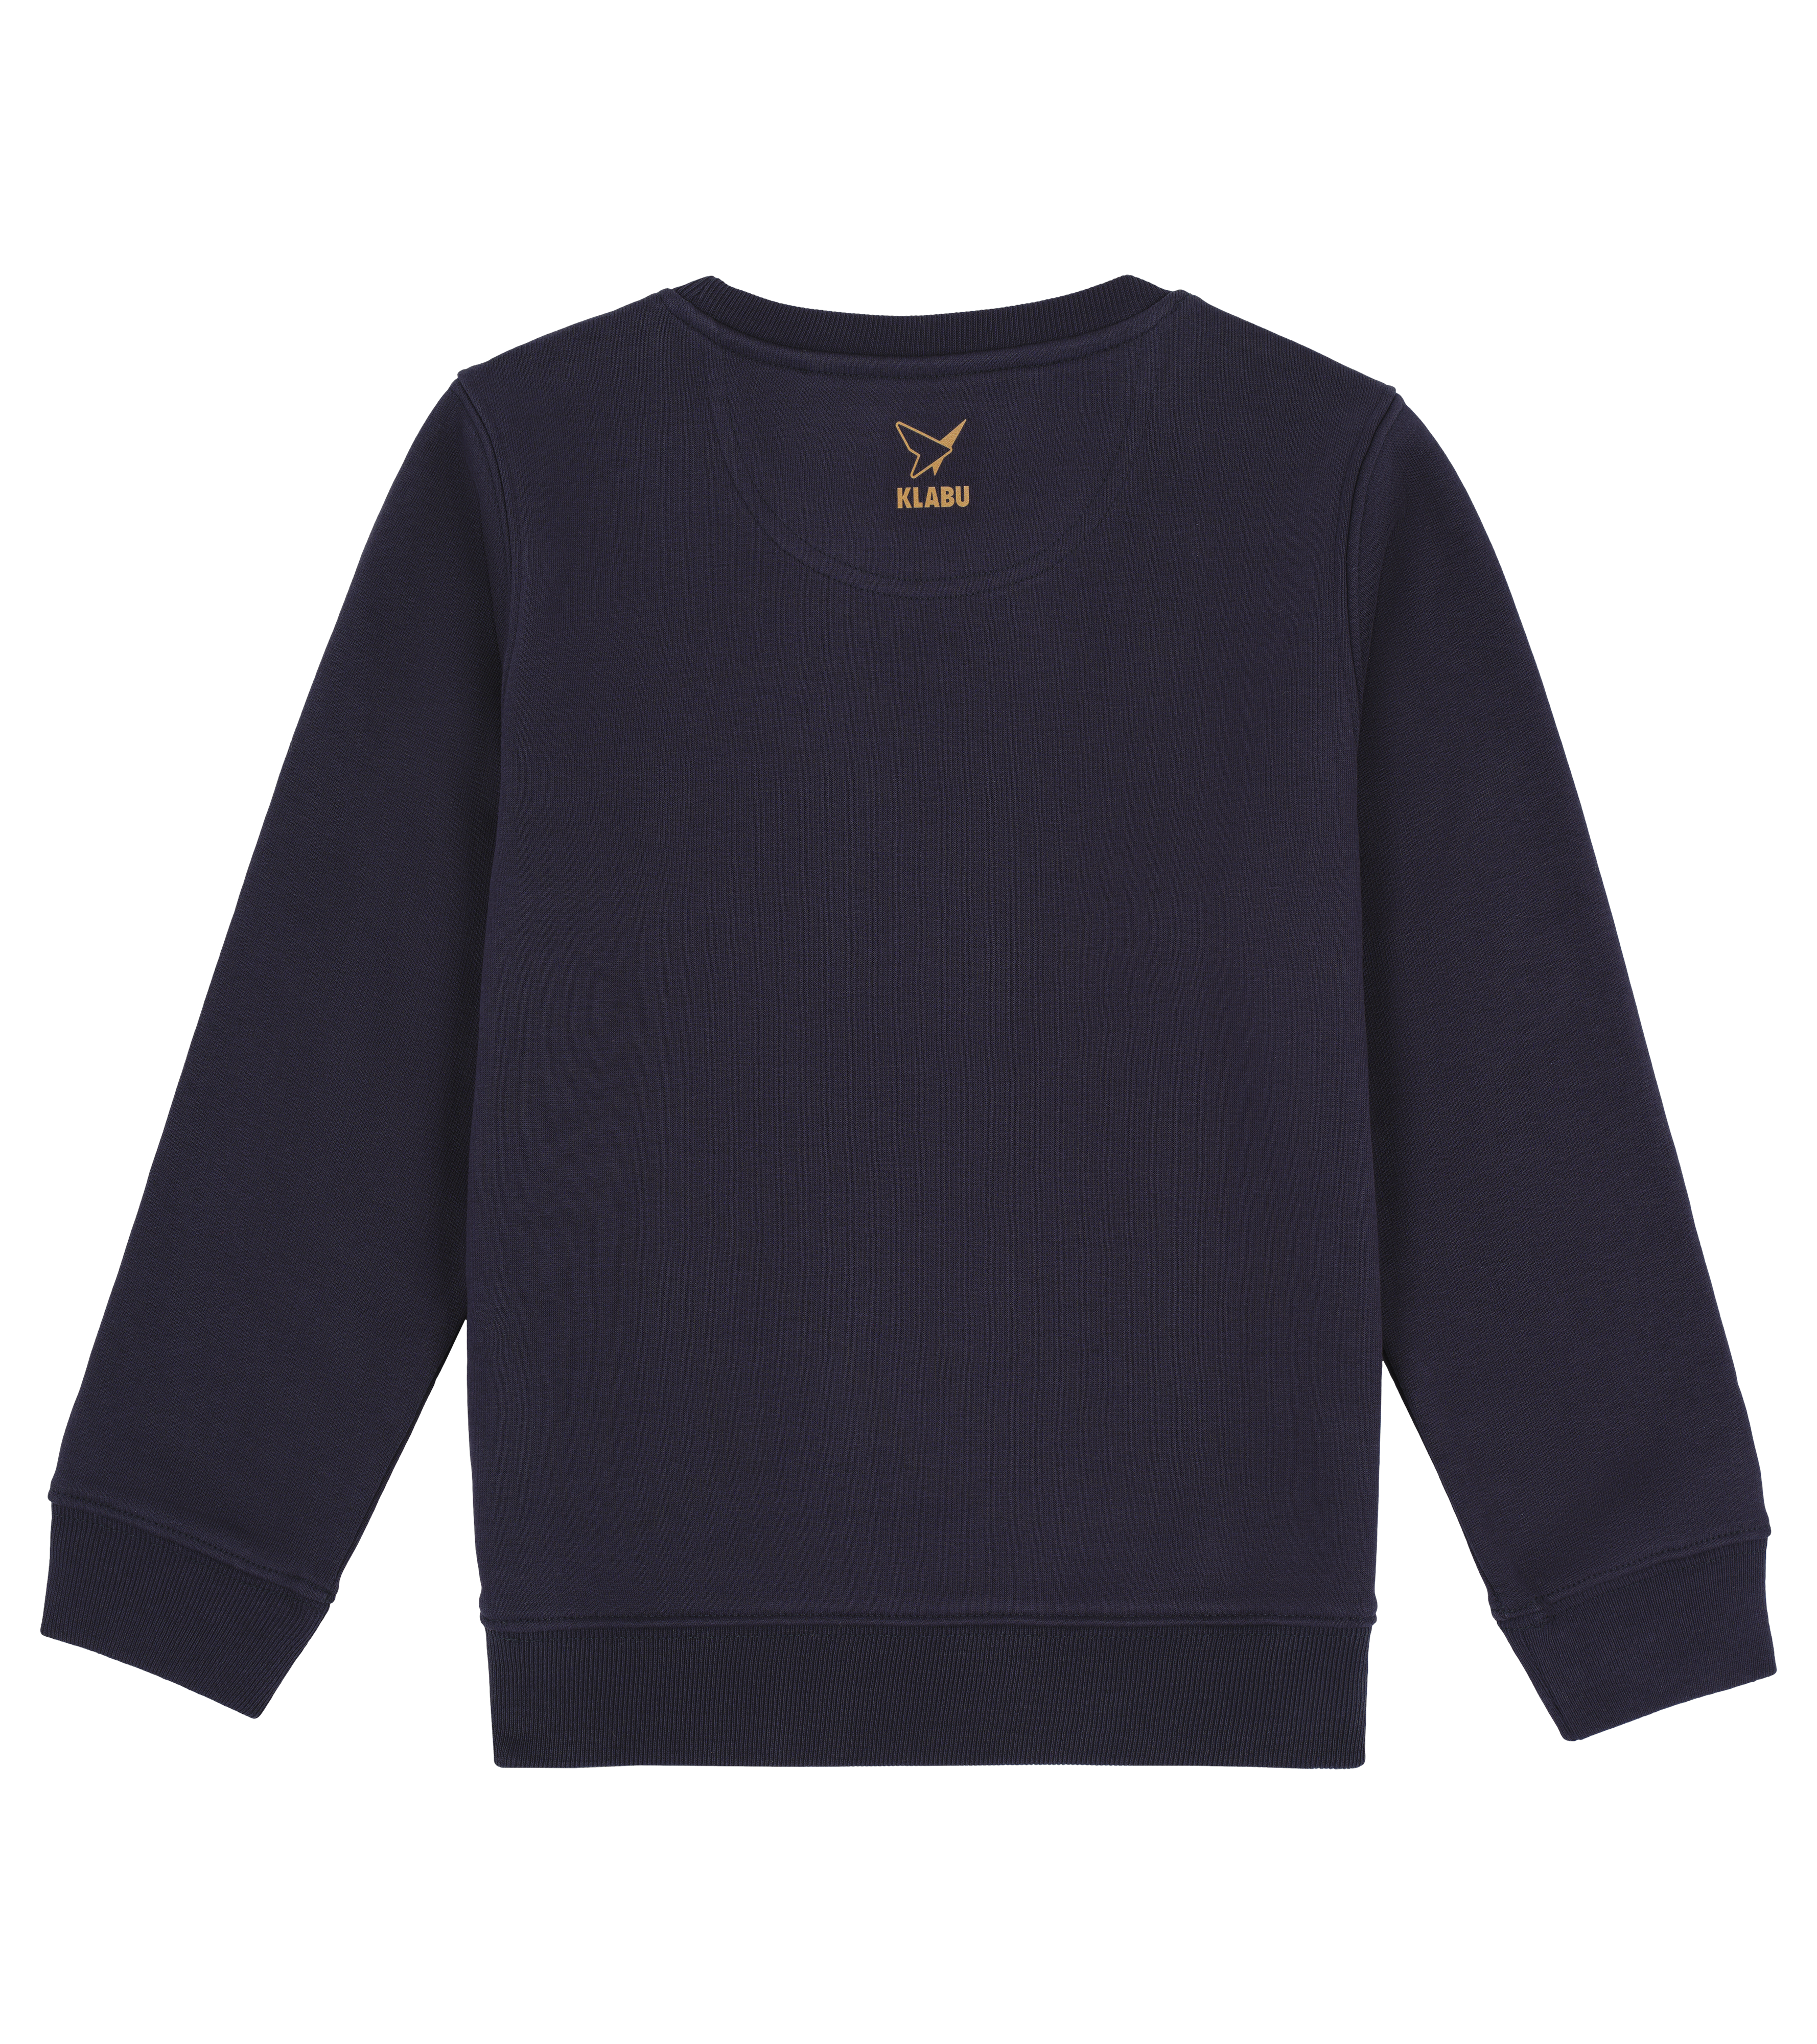 klabu navy sweater with gold graphic logo back